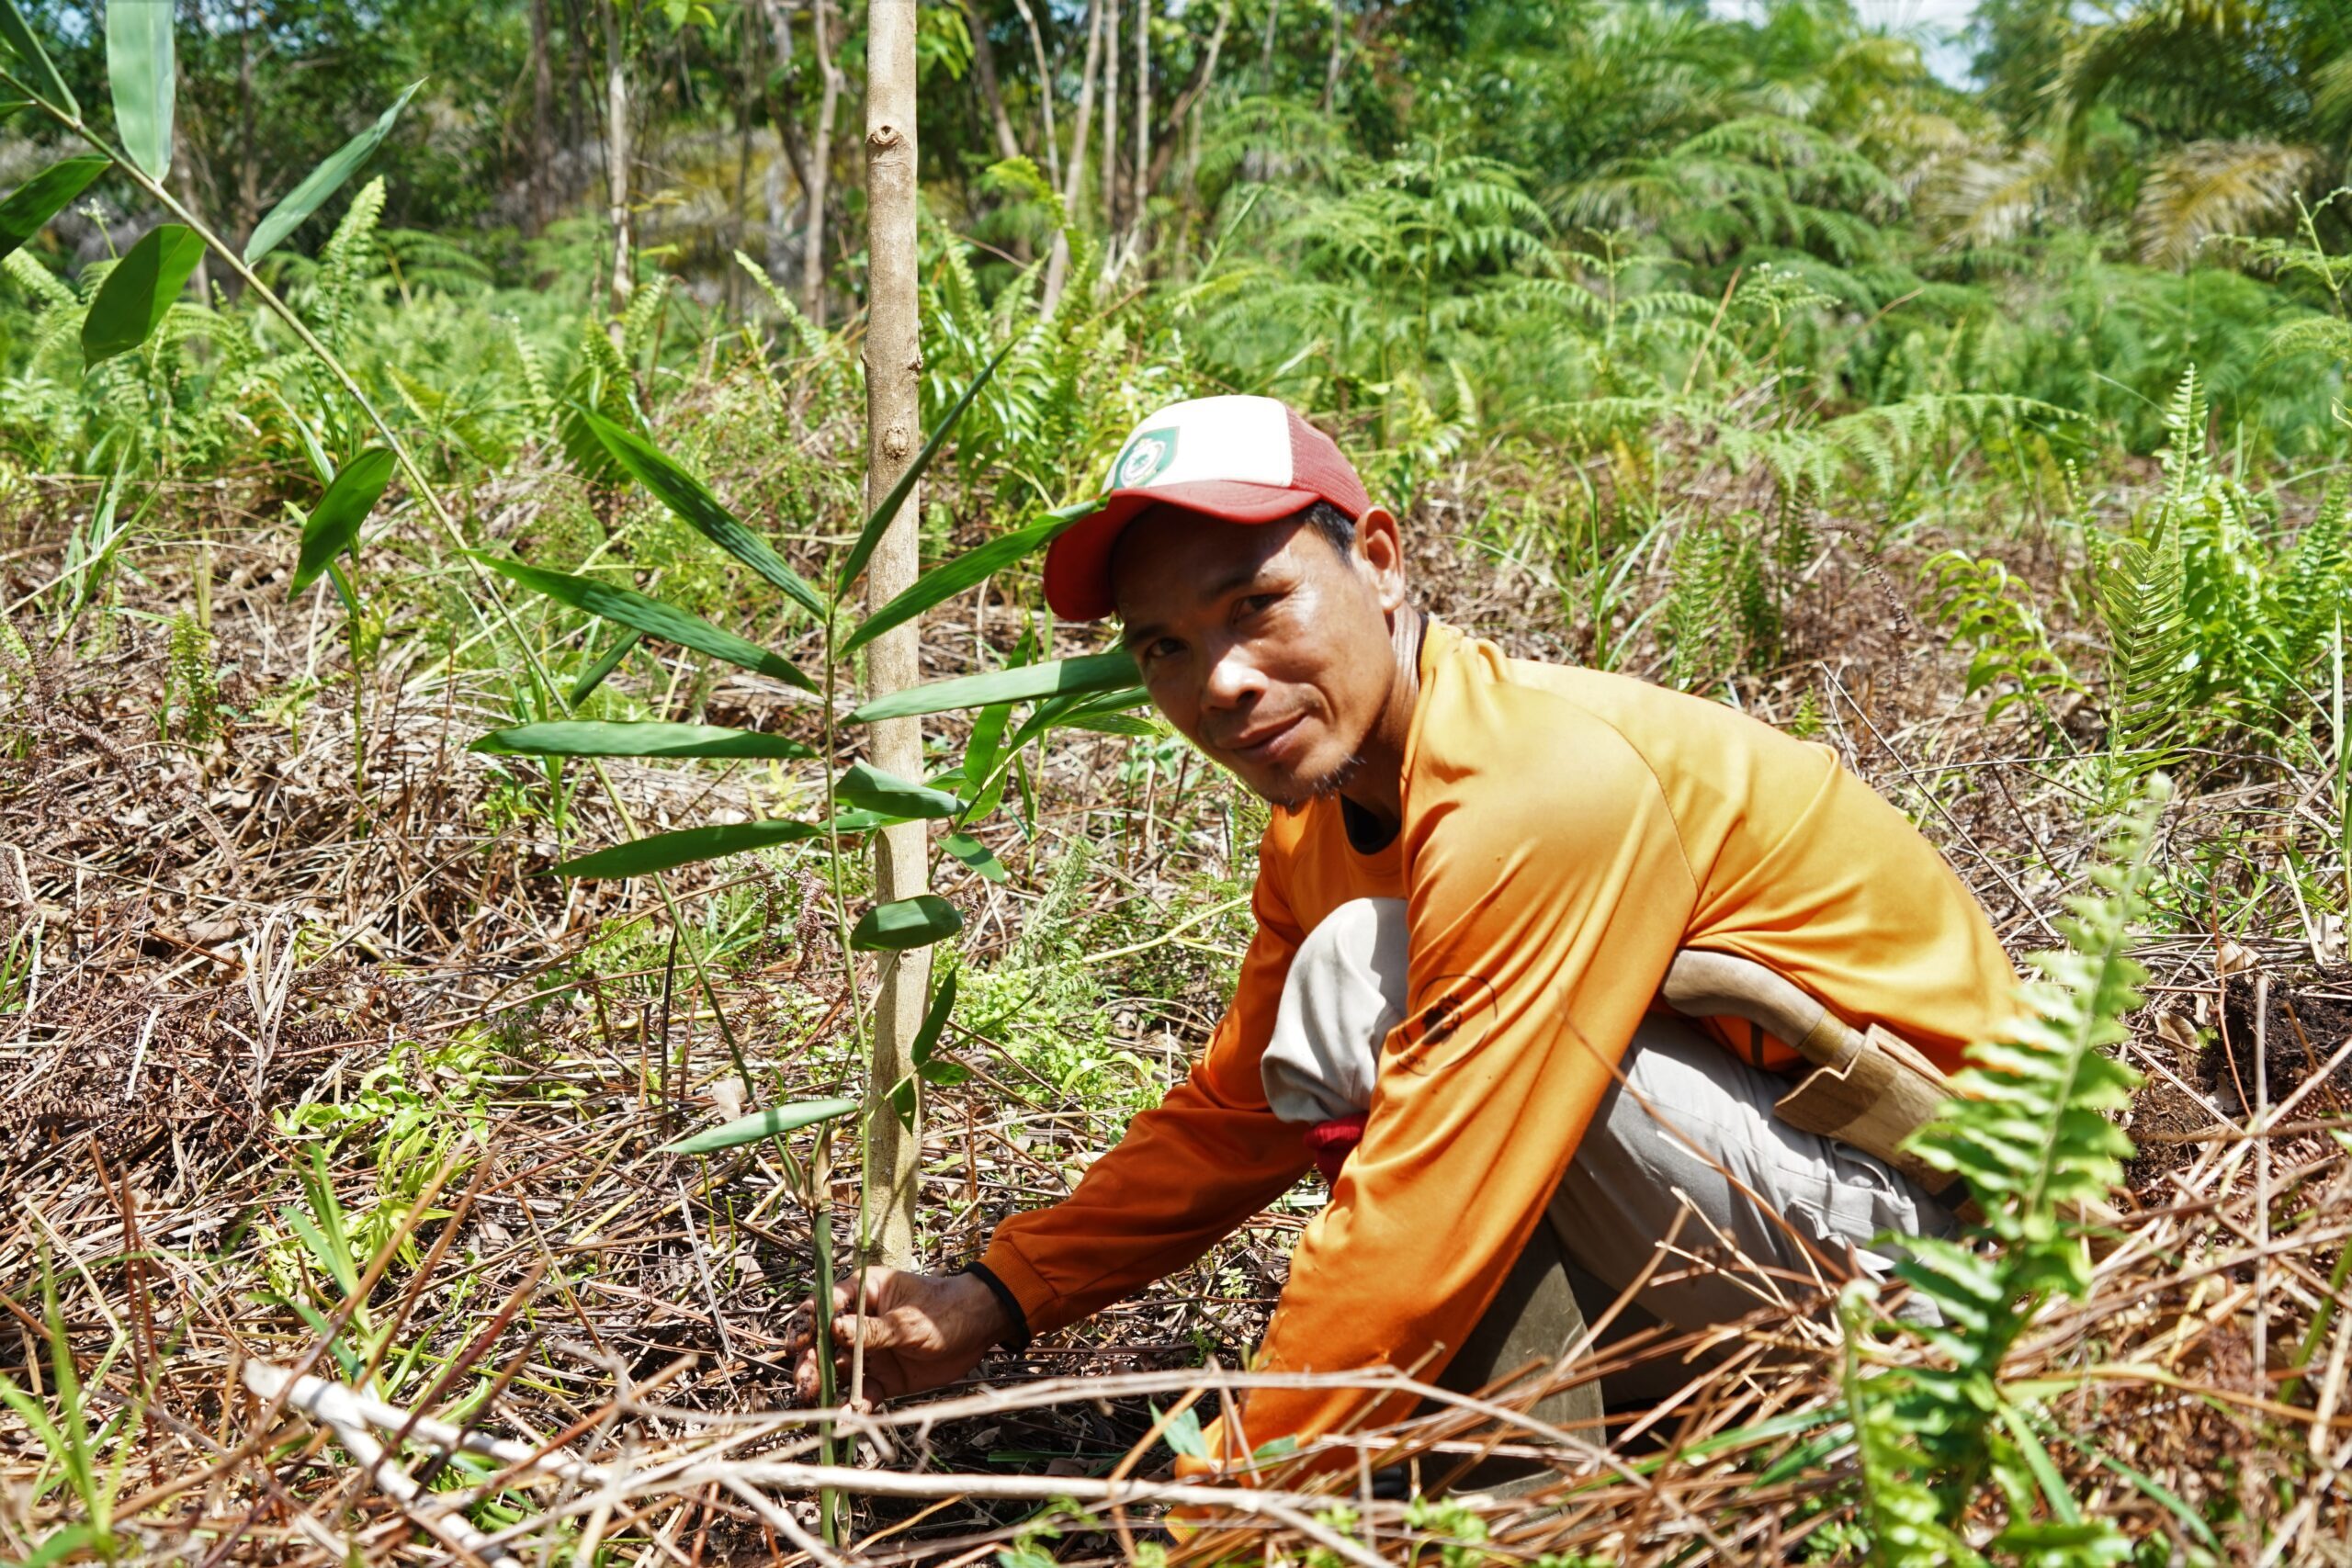 A farmer planting seeds in fertile agricultural soil